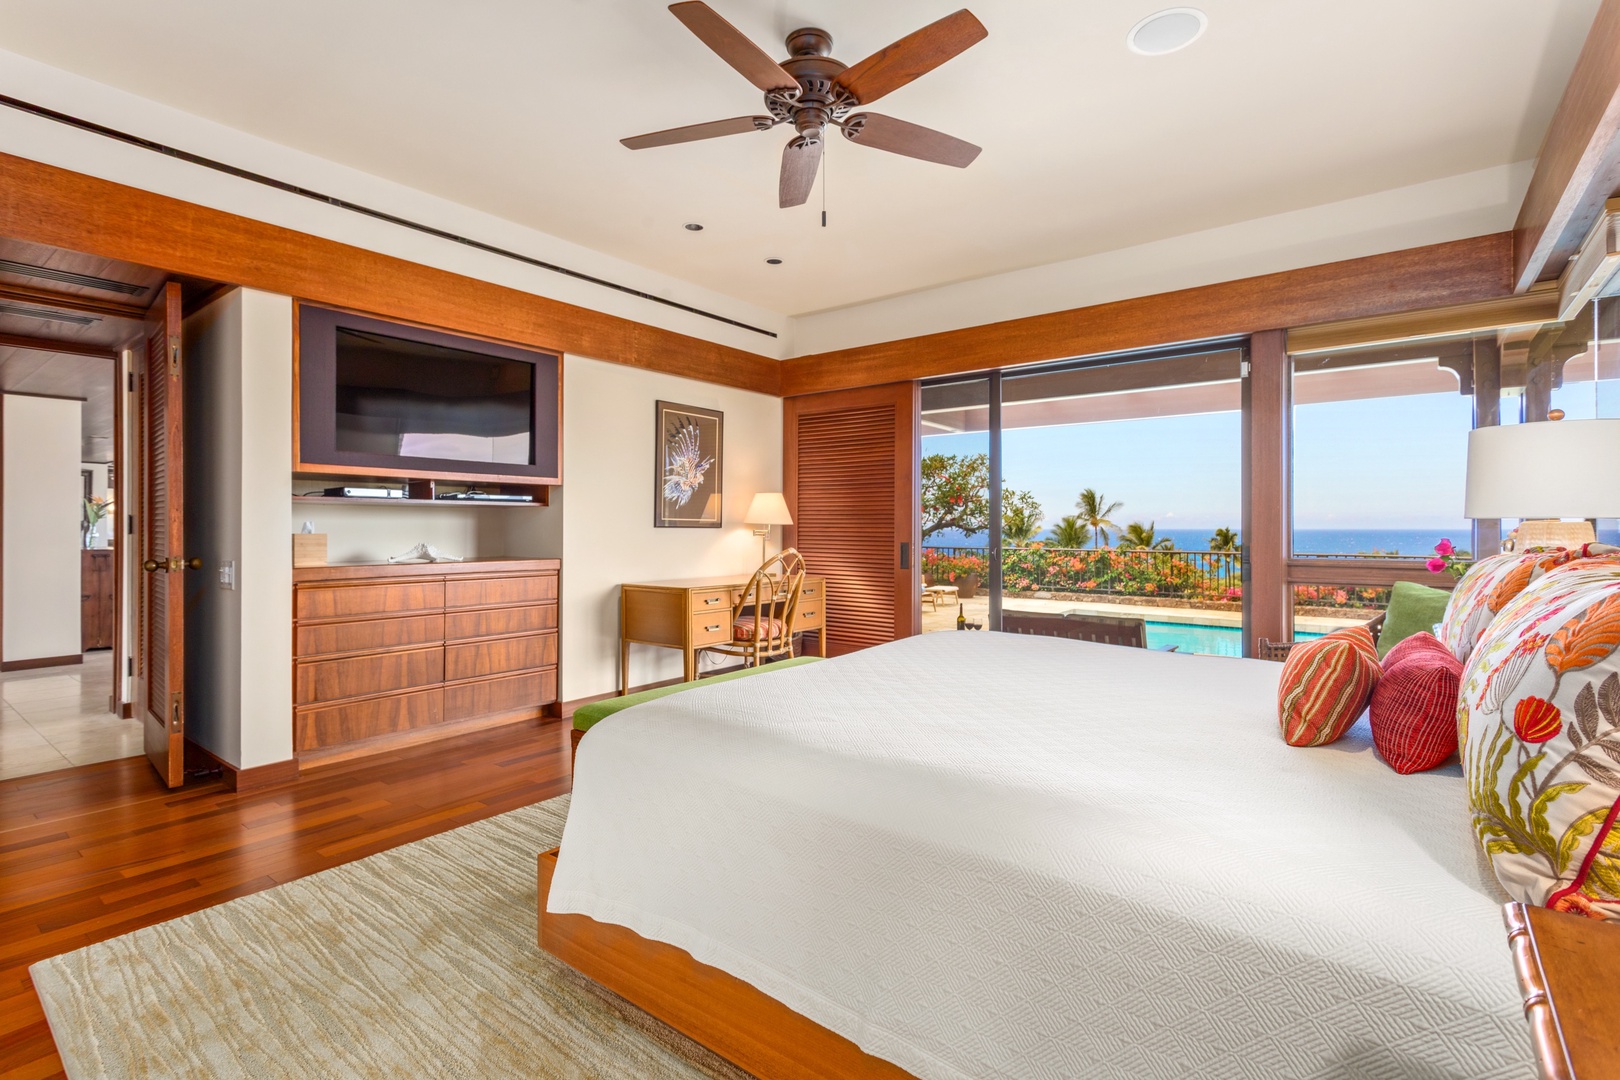 Kamuela Vacation Rentals, 4BD Villas (21) at Mauna Kea Resort - View of Primary w/Flatscreen TV & View of Pool Deck & Ocean.